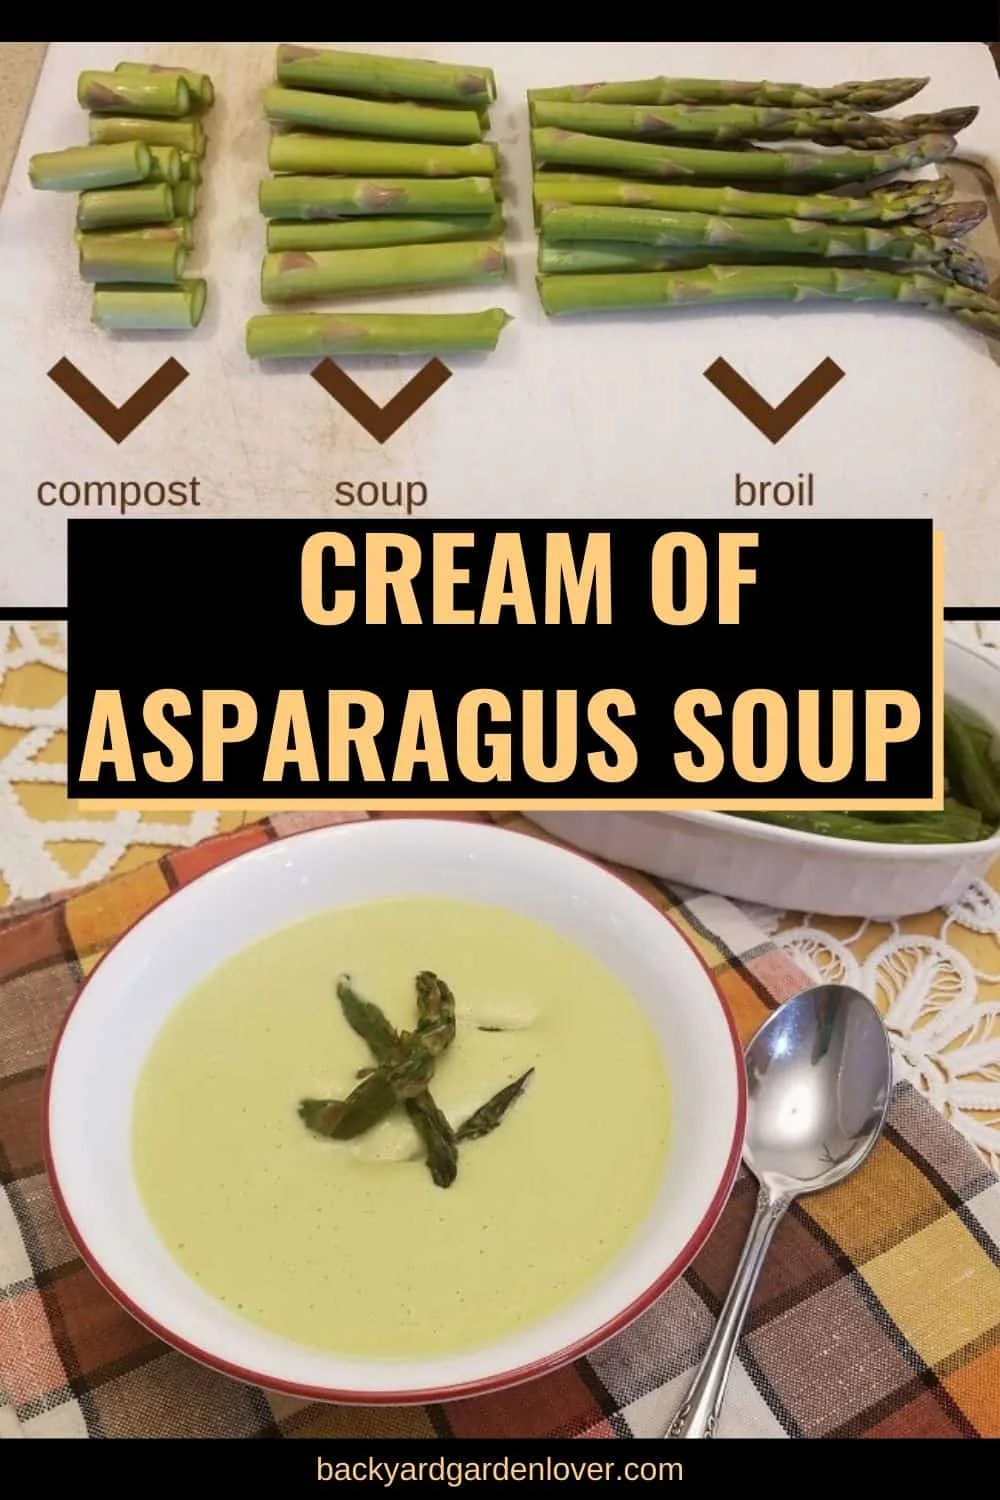 Cream of asparagus soup - Pinterest image